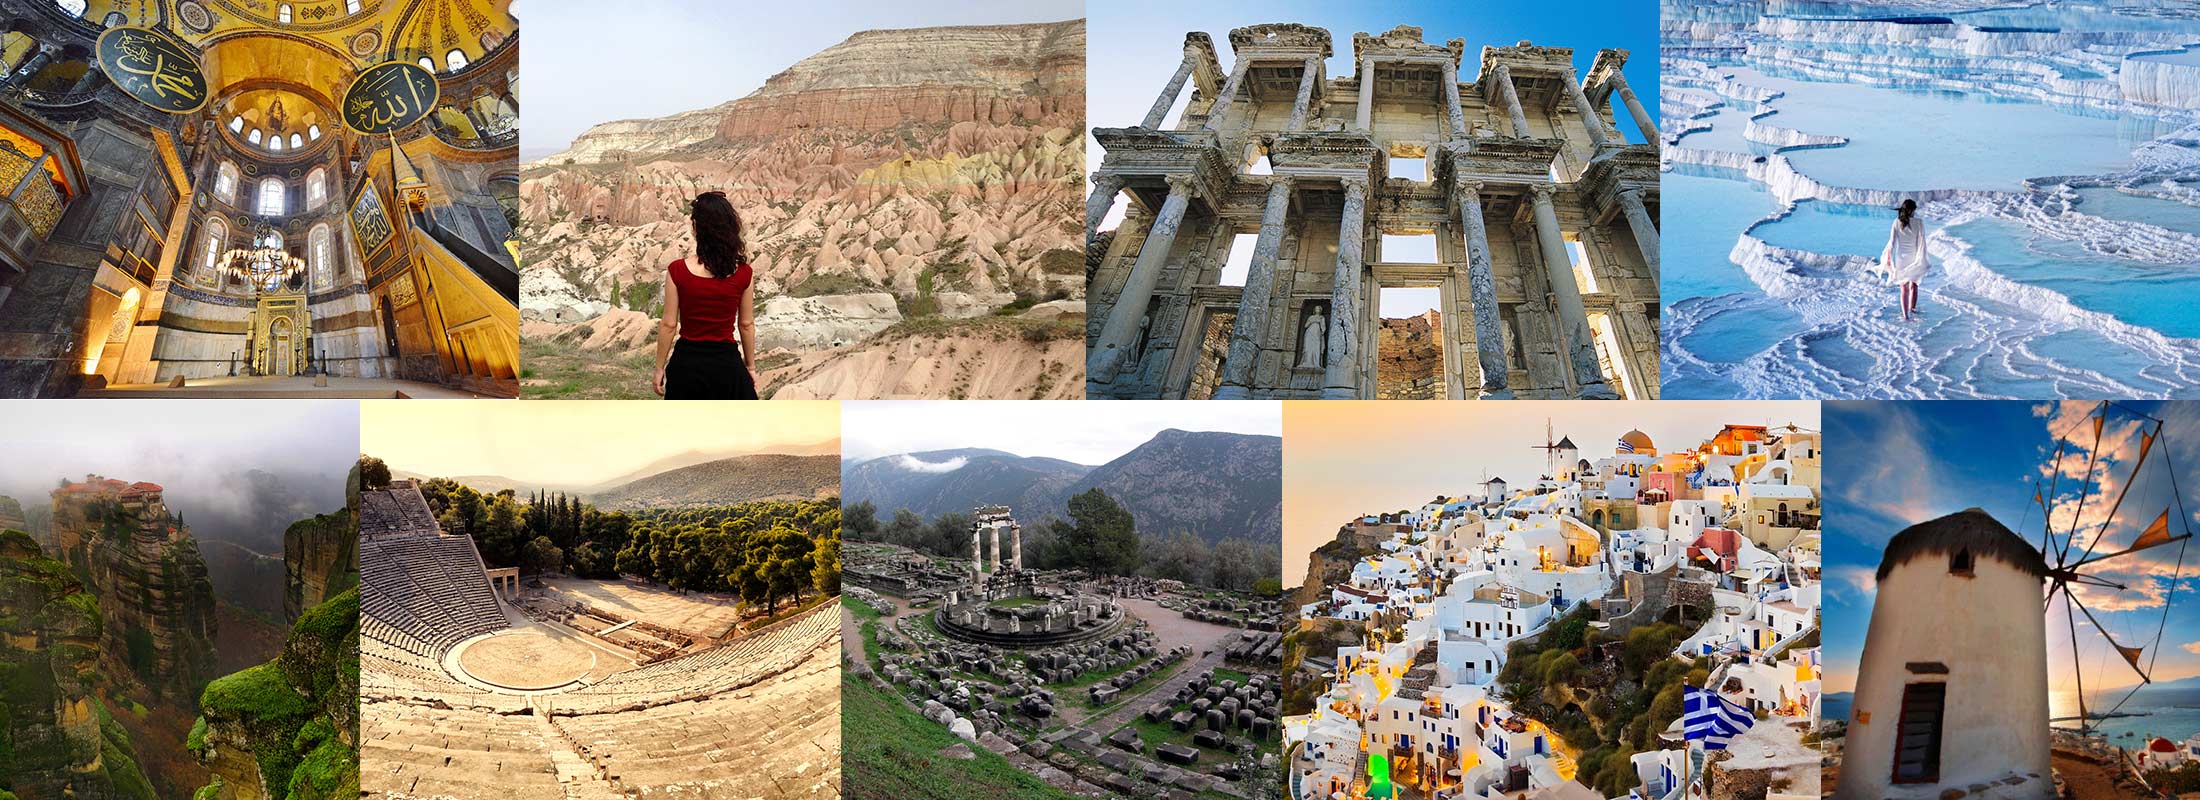 istanbul-cappadocia-ephesus-sirince-pamukkale-hierapolis-athens-meteora-delphi-mykonos-santorini-greece-turkey-package-tours